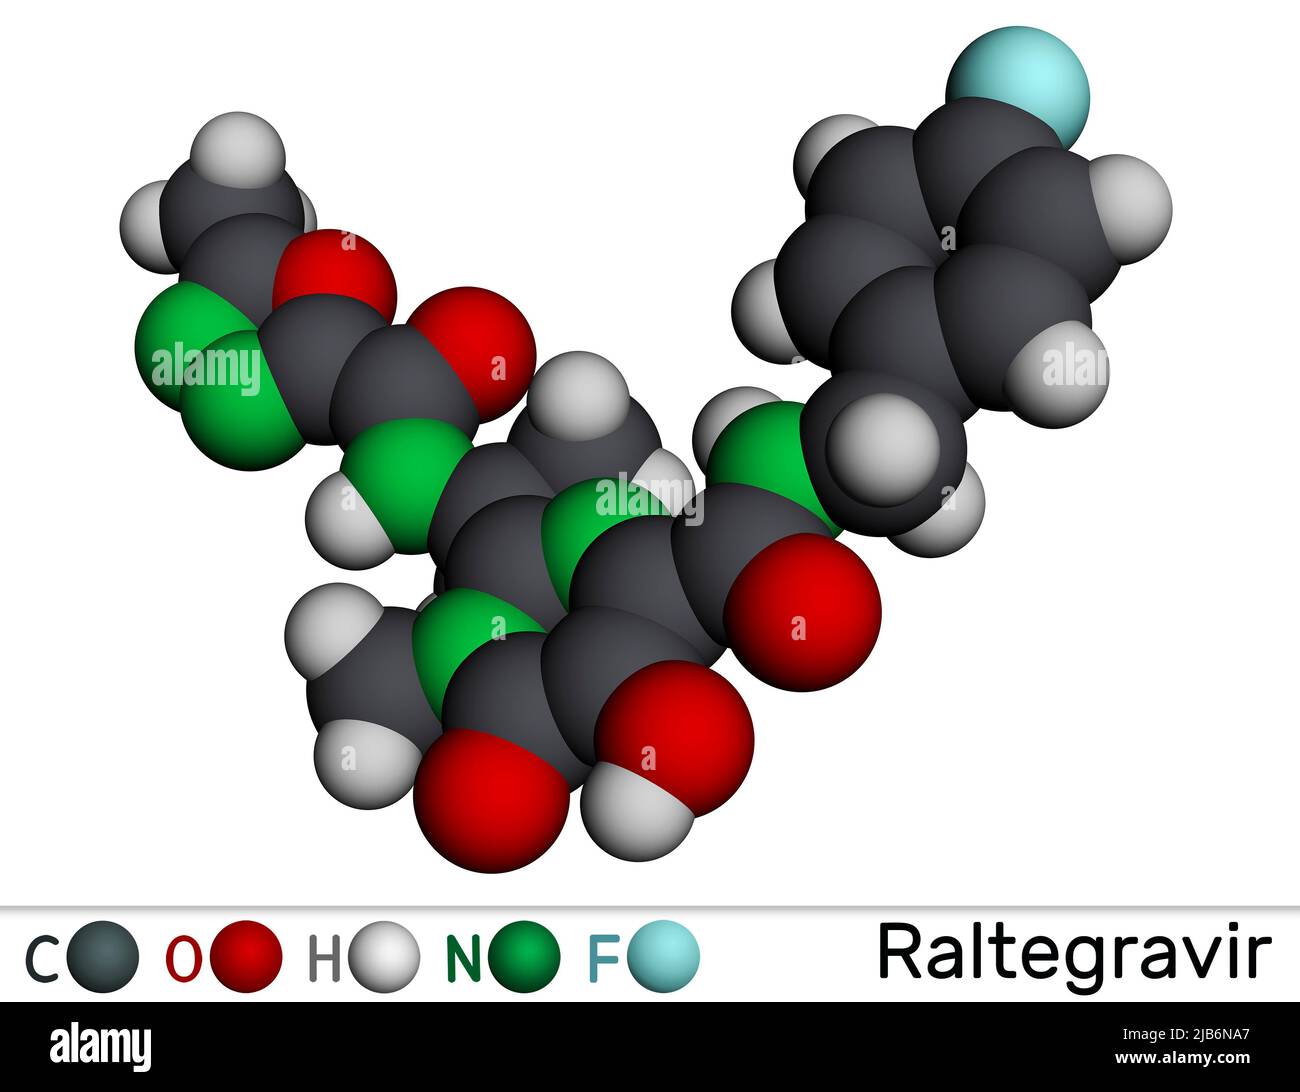 Raltegravir, RAL molecule. It is antiretroviral medication, used to treat HIV, AIDS. Molecular model. 3D rendering Stock Photo